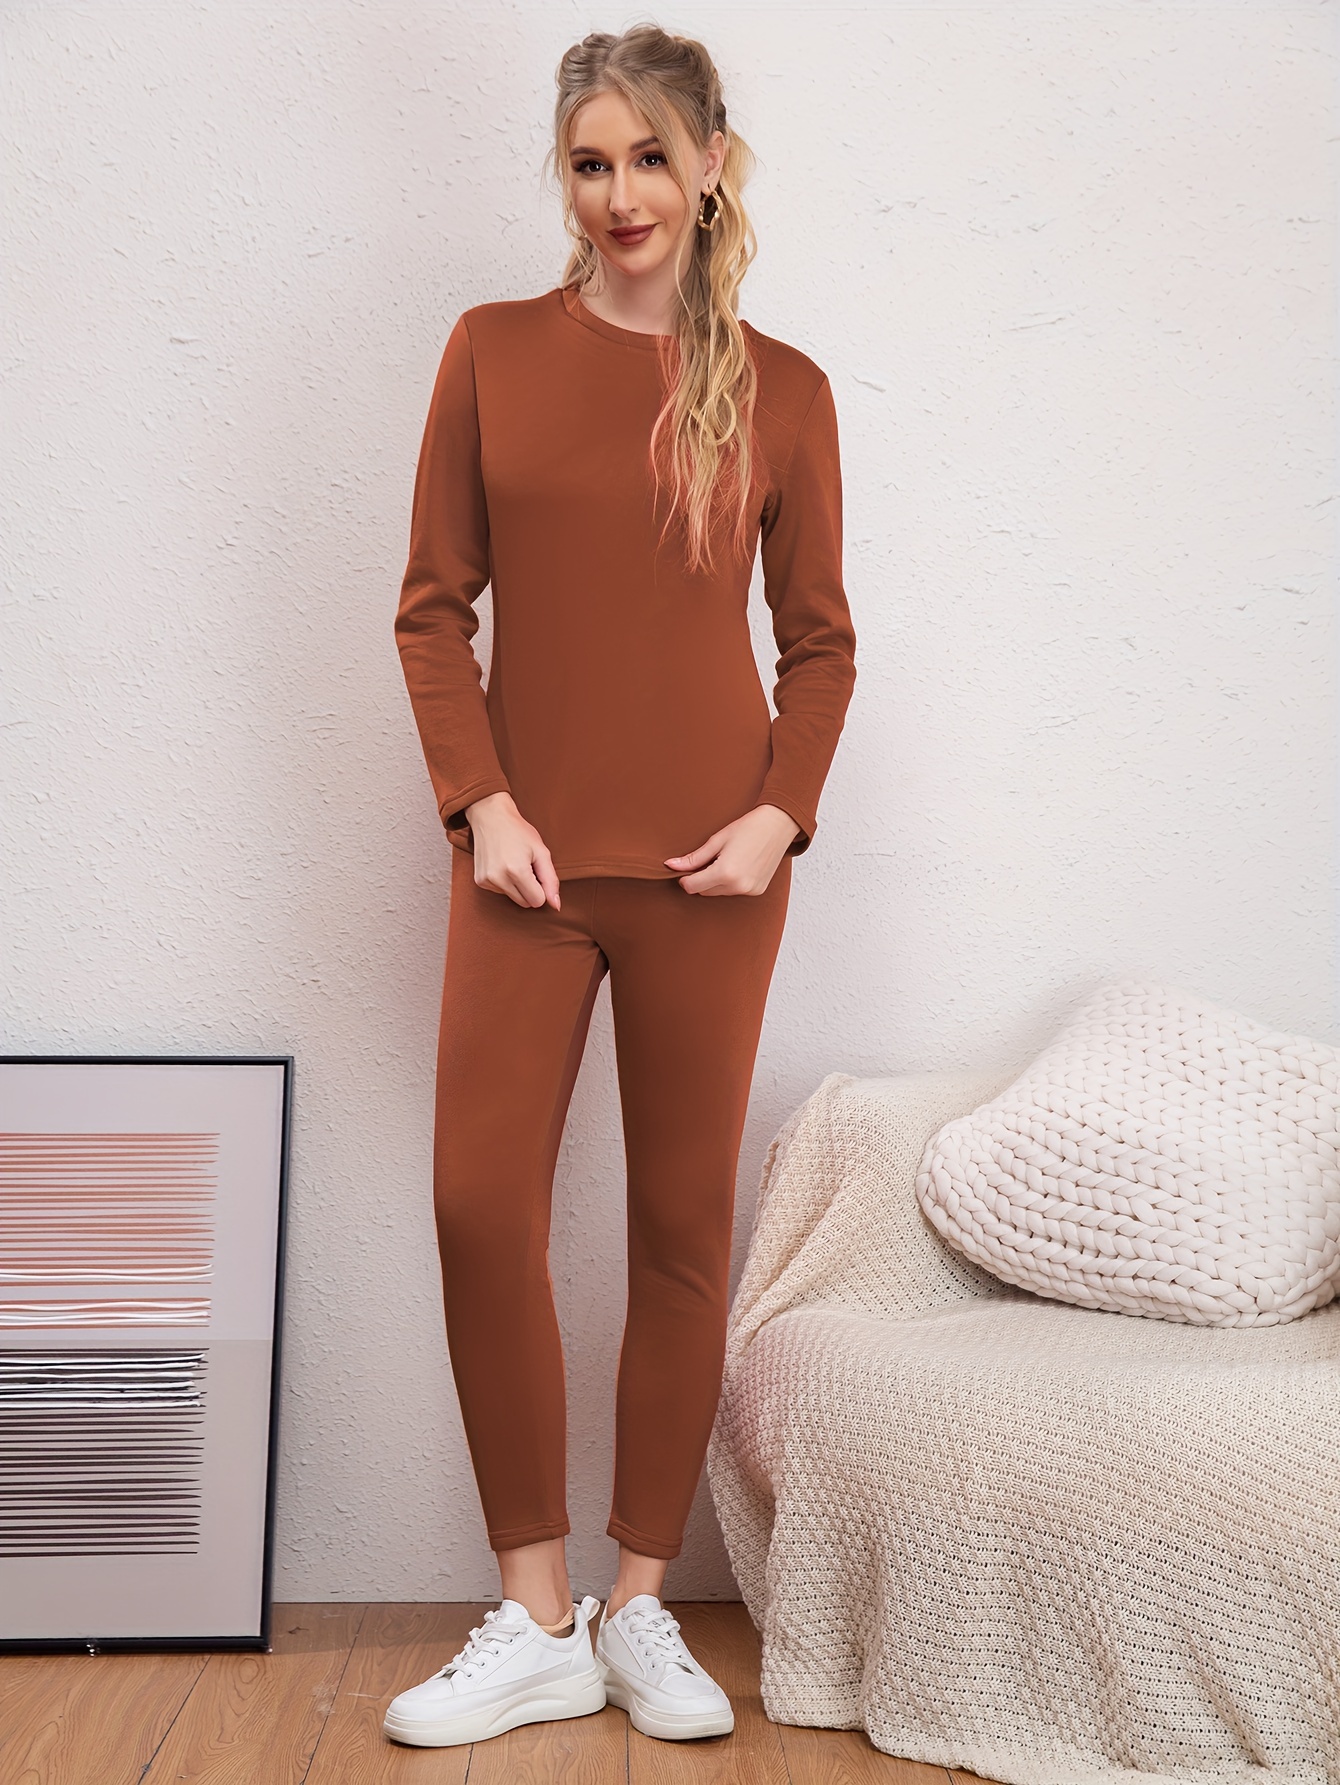 Shop Fashion Warm Clothing Women's Thermal Underwear Female Long Johns  Winter Thermal Set Online